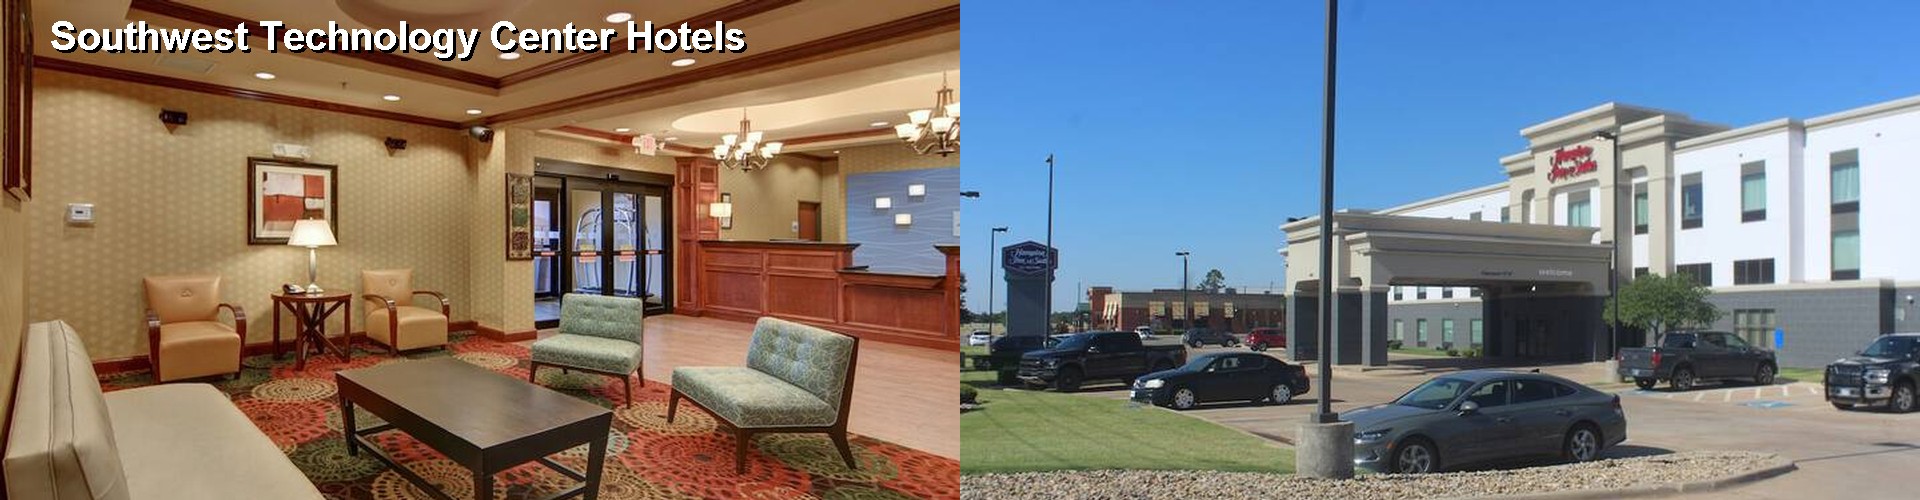 4 Best Hotels near Southwest Technology Center